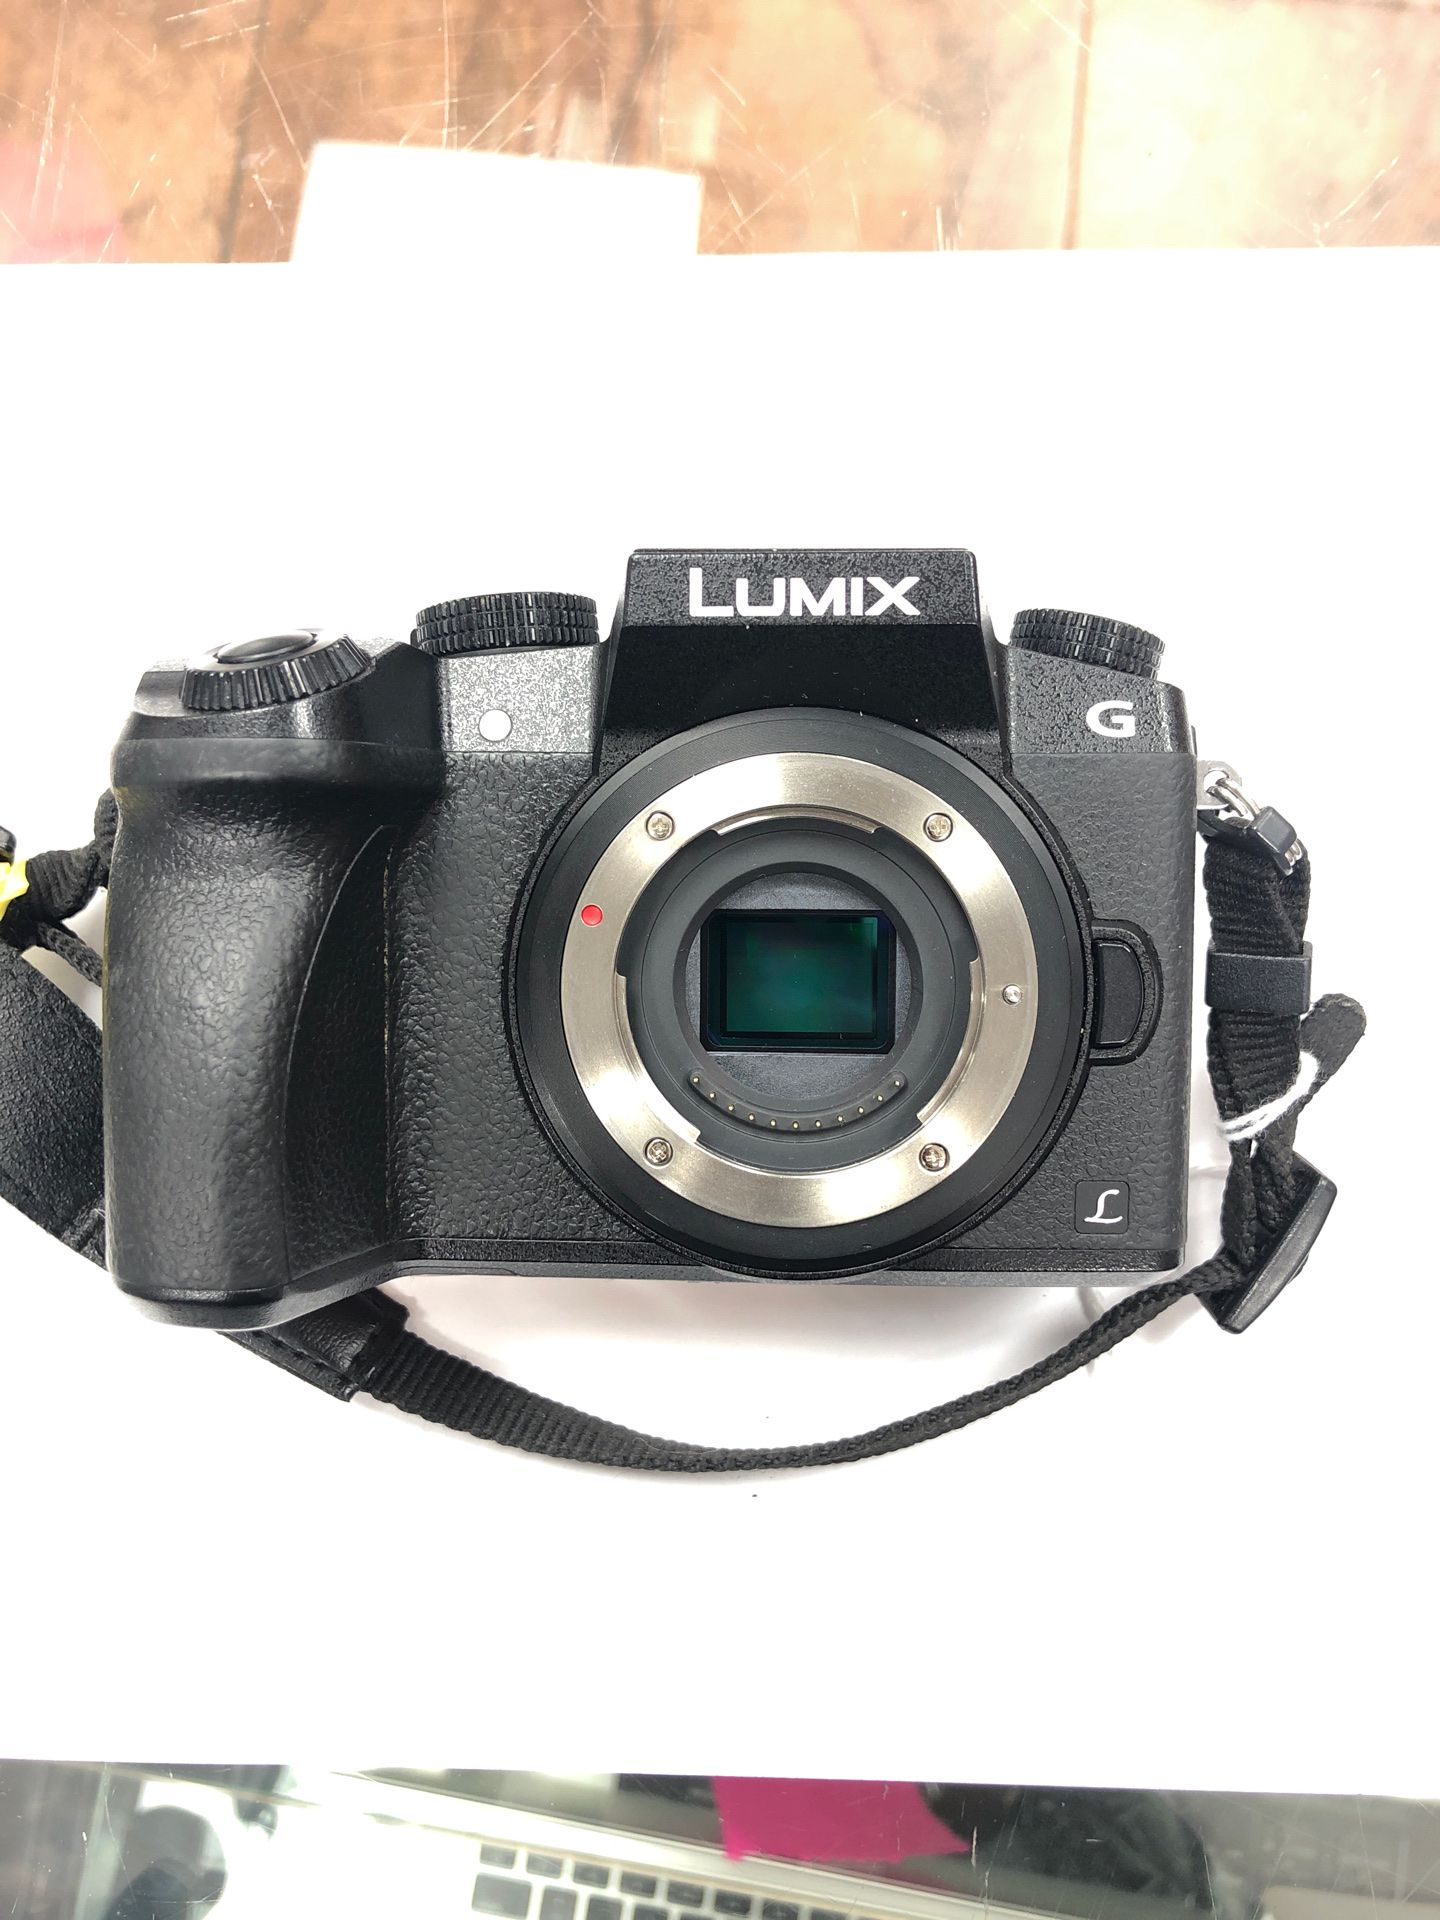 LUMIX G - Digital Camera - Lens Included